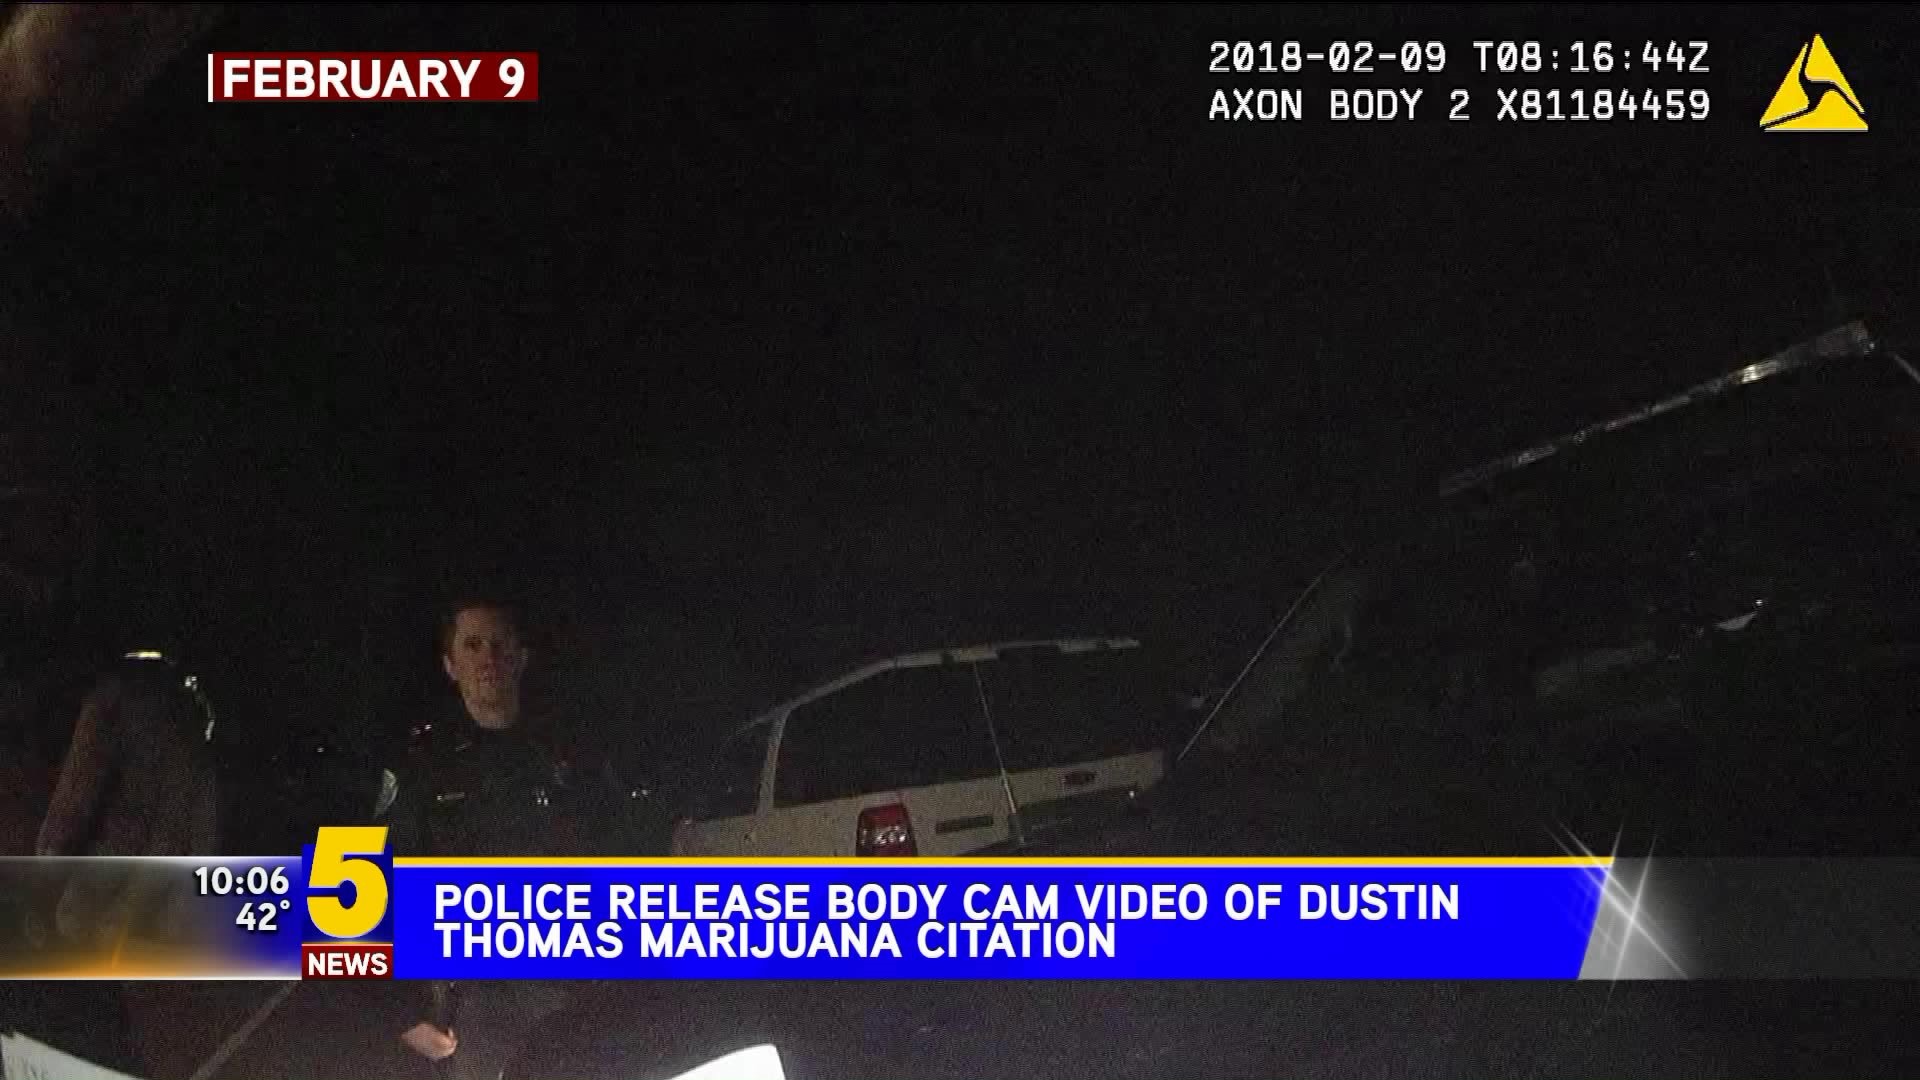 Police Release Dustin Thomas Citation Footage